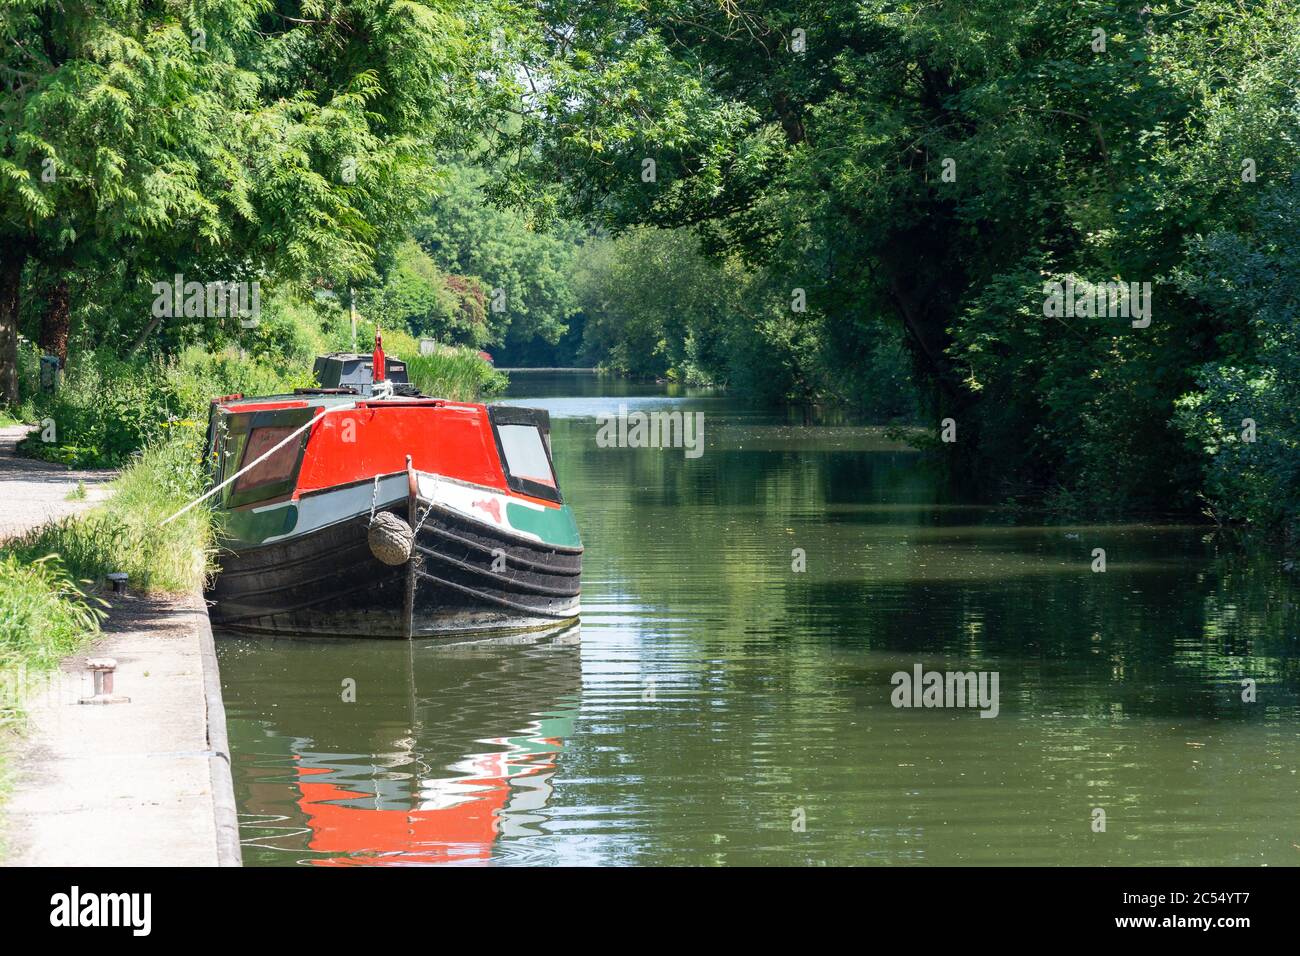 Canal boat on Kennett and Avon Canal, Kintbury, Berkshire, England, United Kingdom Stock Photo